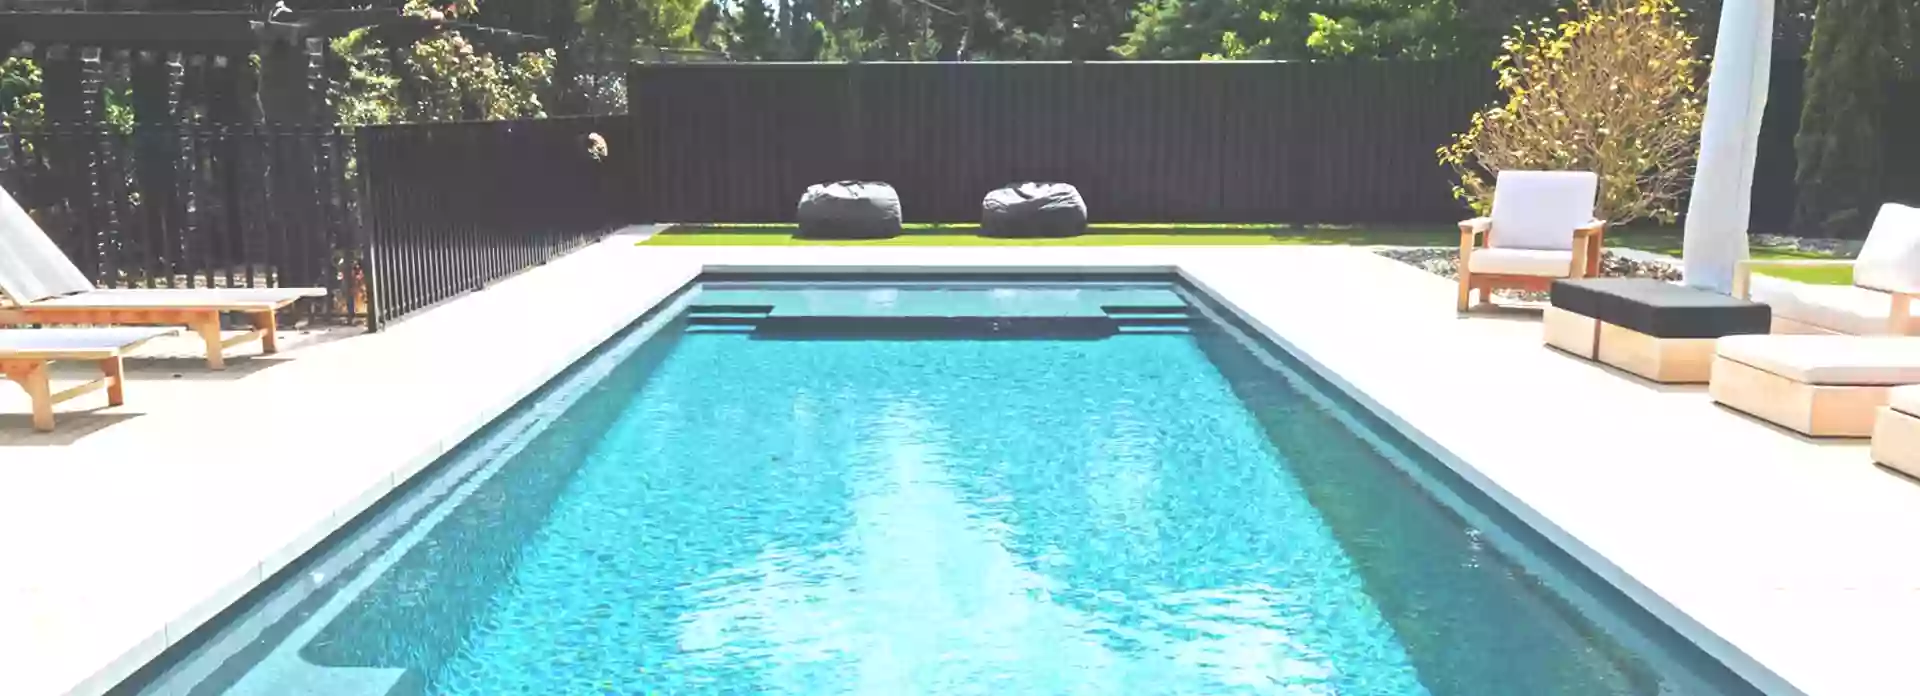 NZ Pools